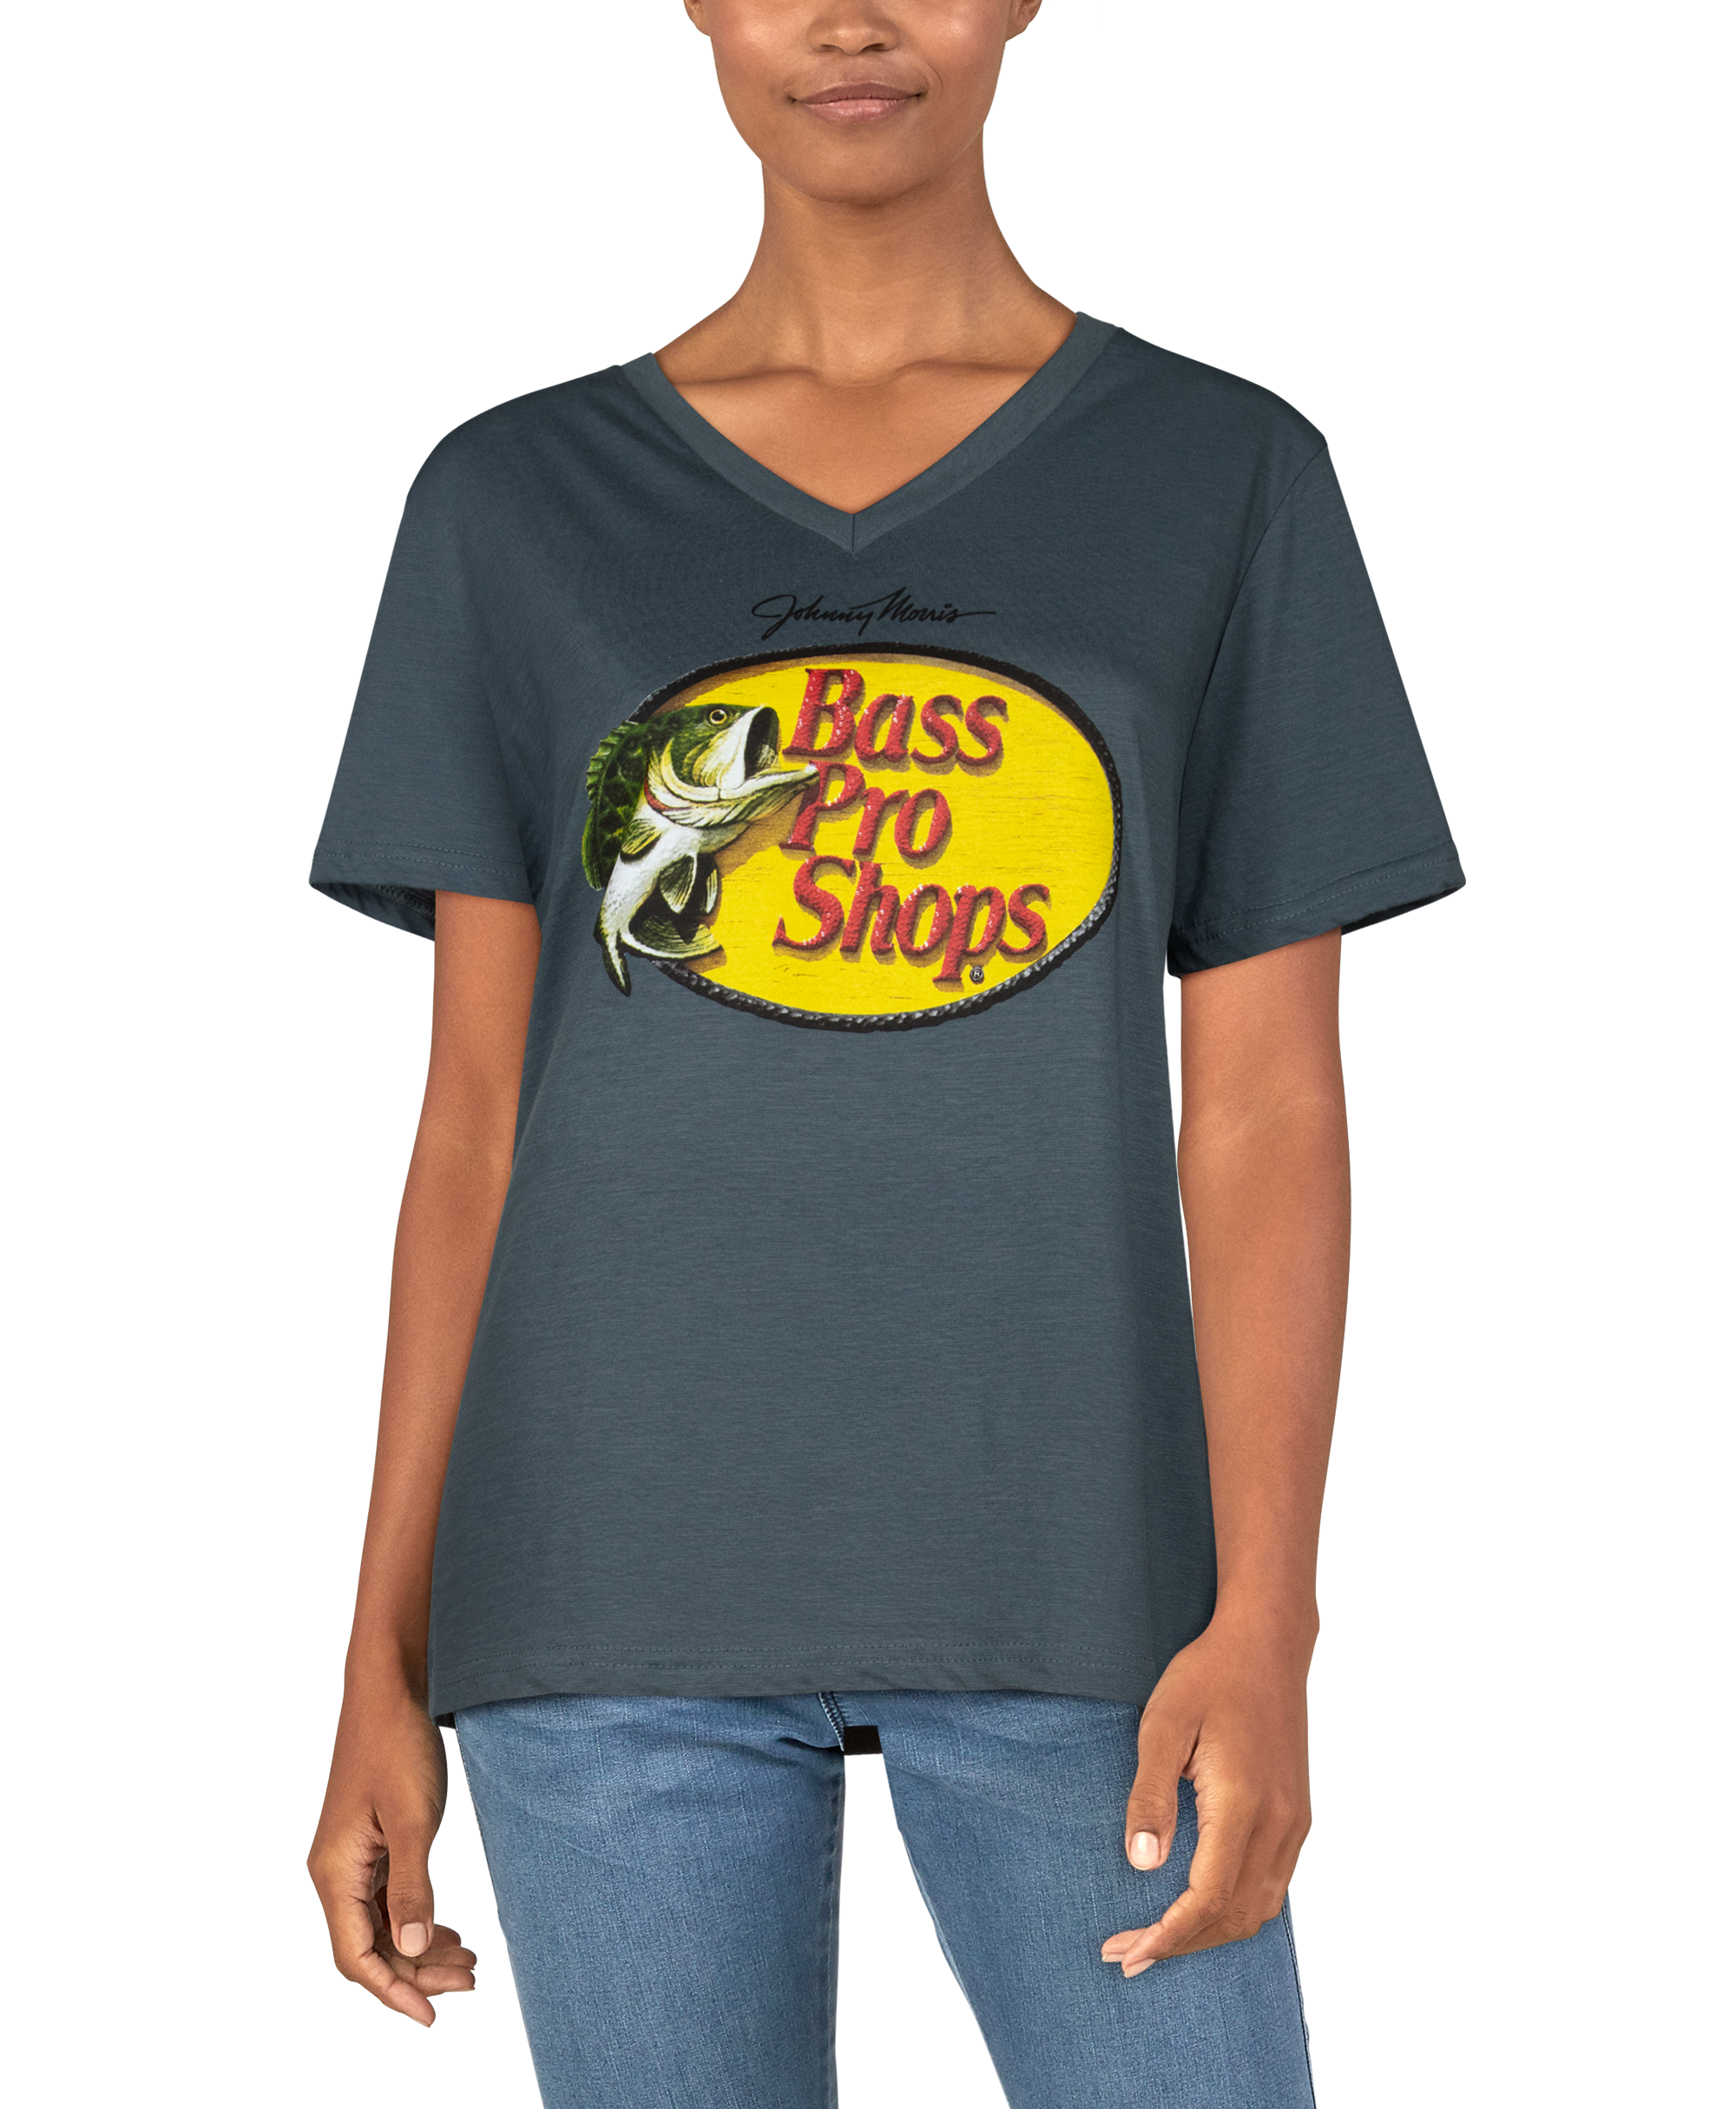 Bass Pro Shops Woodcut Logo V-Neck Short-Sleeve T-Shirt for Ladies - Charcoal - S